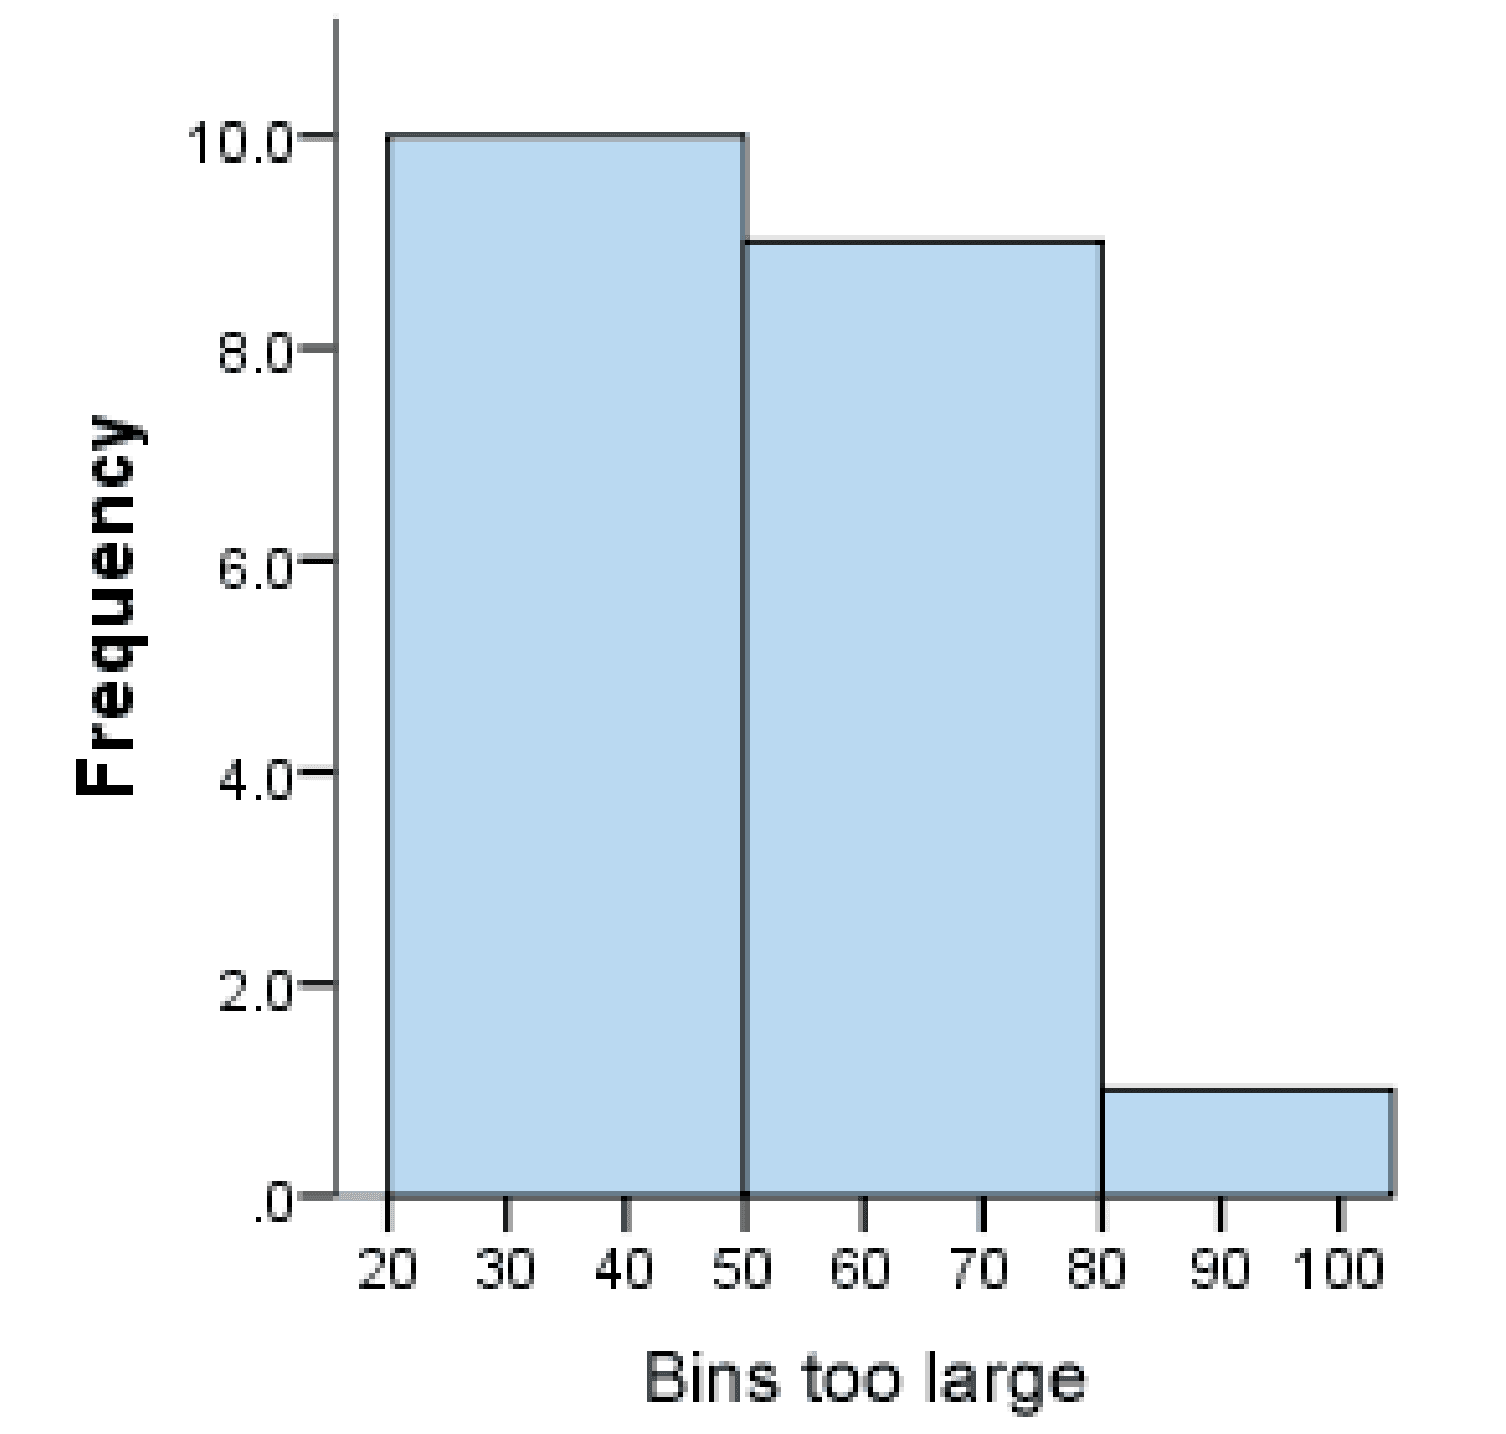 large bins histograms